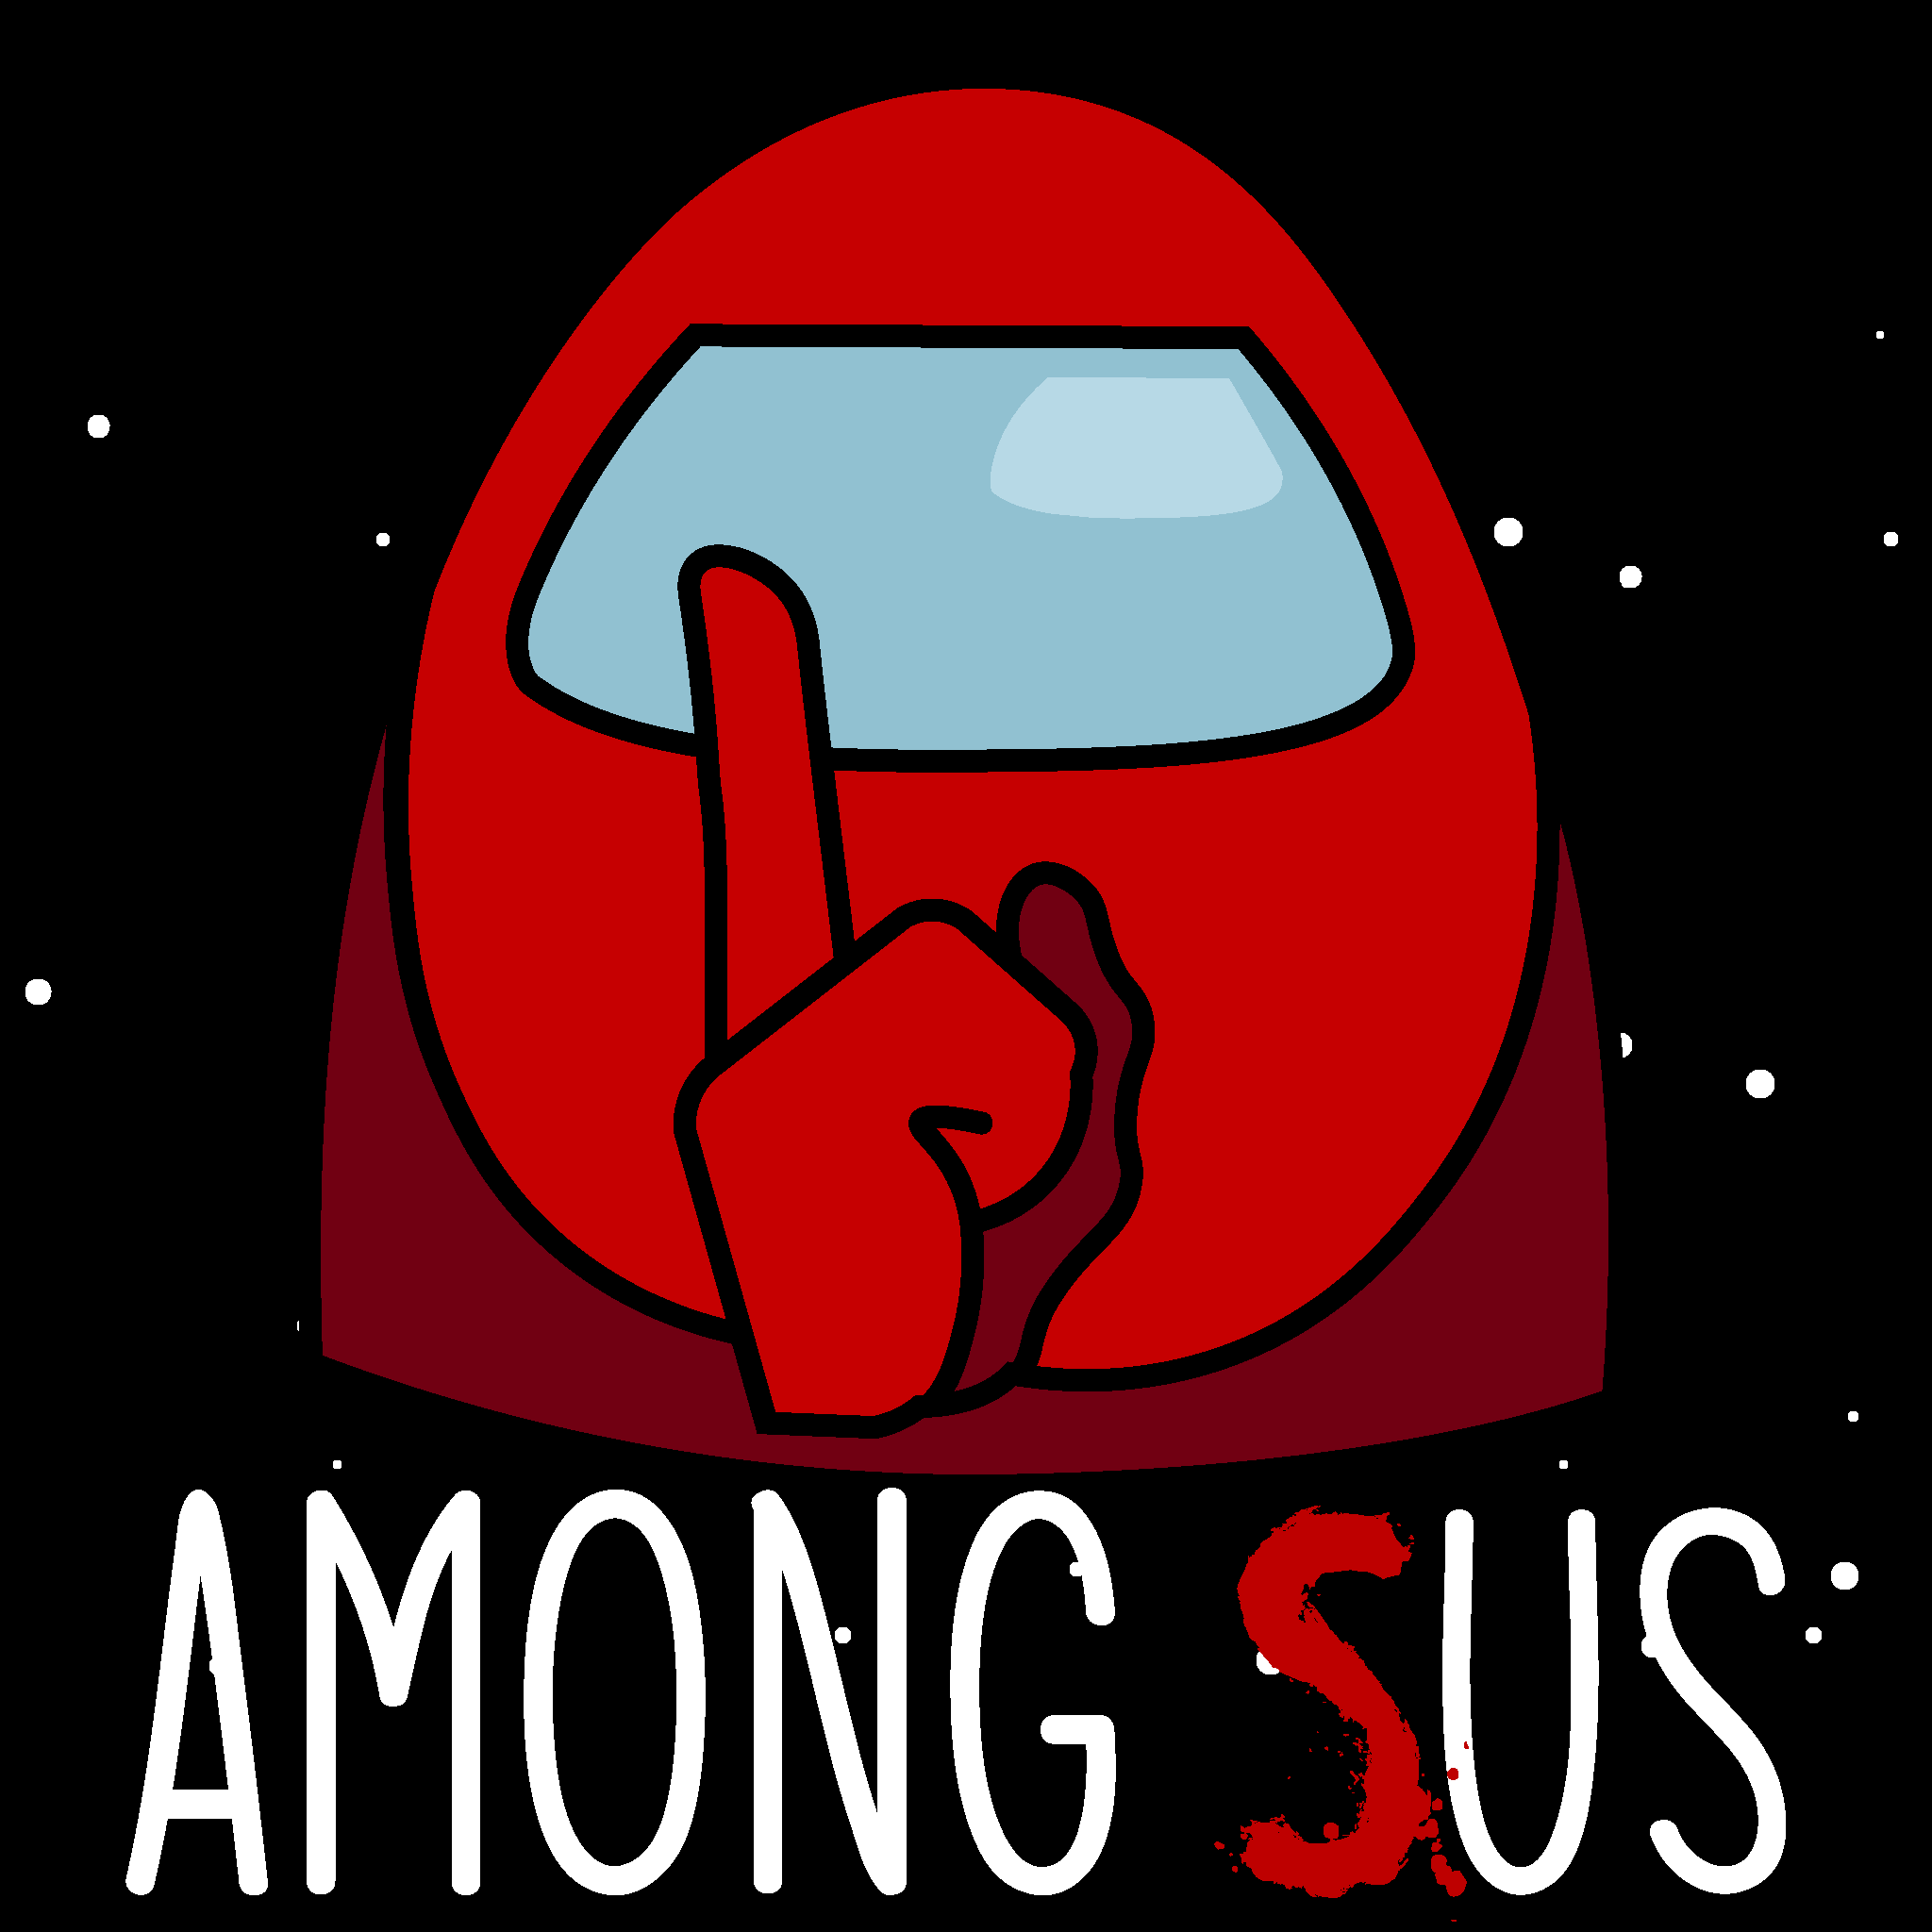 Among Us Logo - Hello guys, I redesigned the Among Us